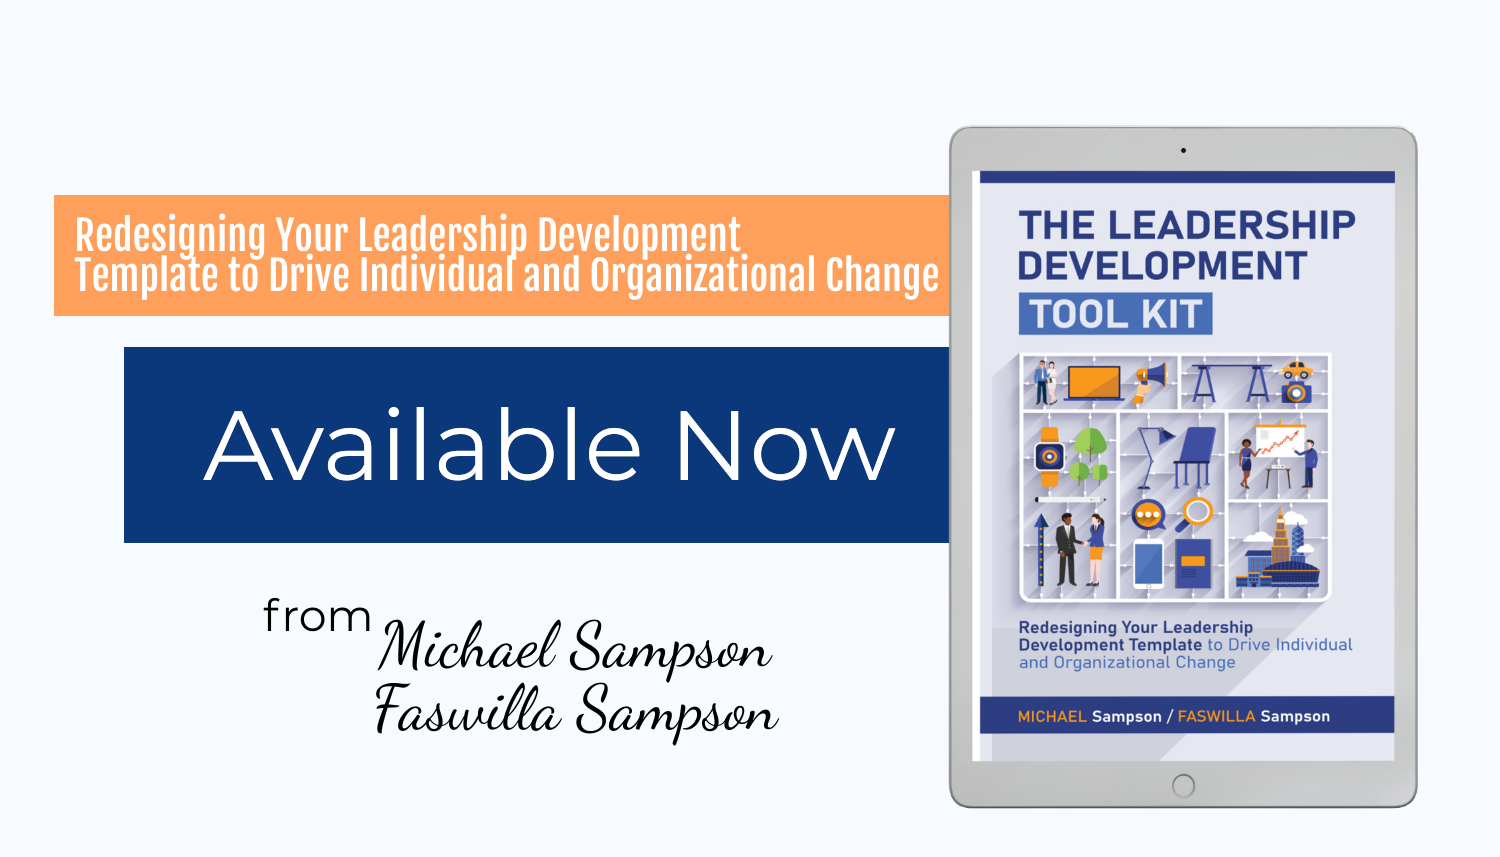 The Leadership Development Tool Kit tablet